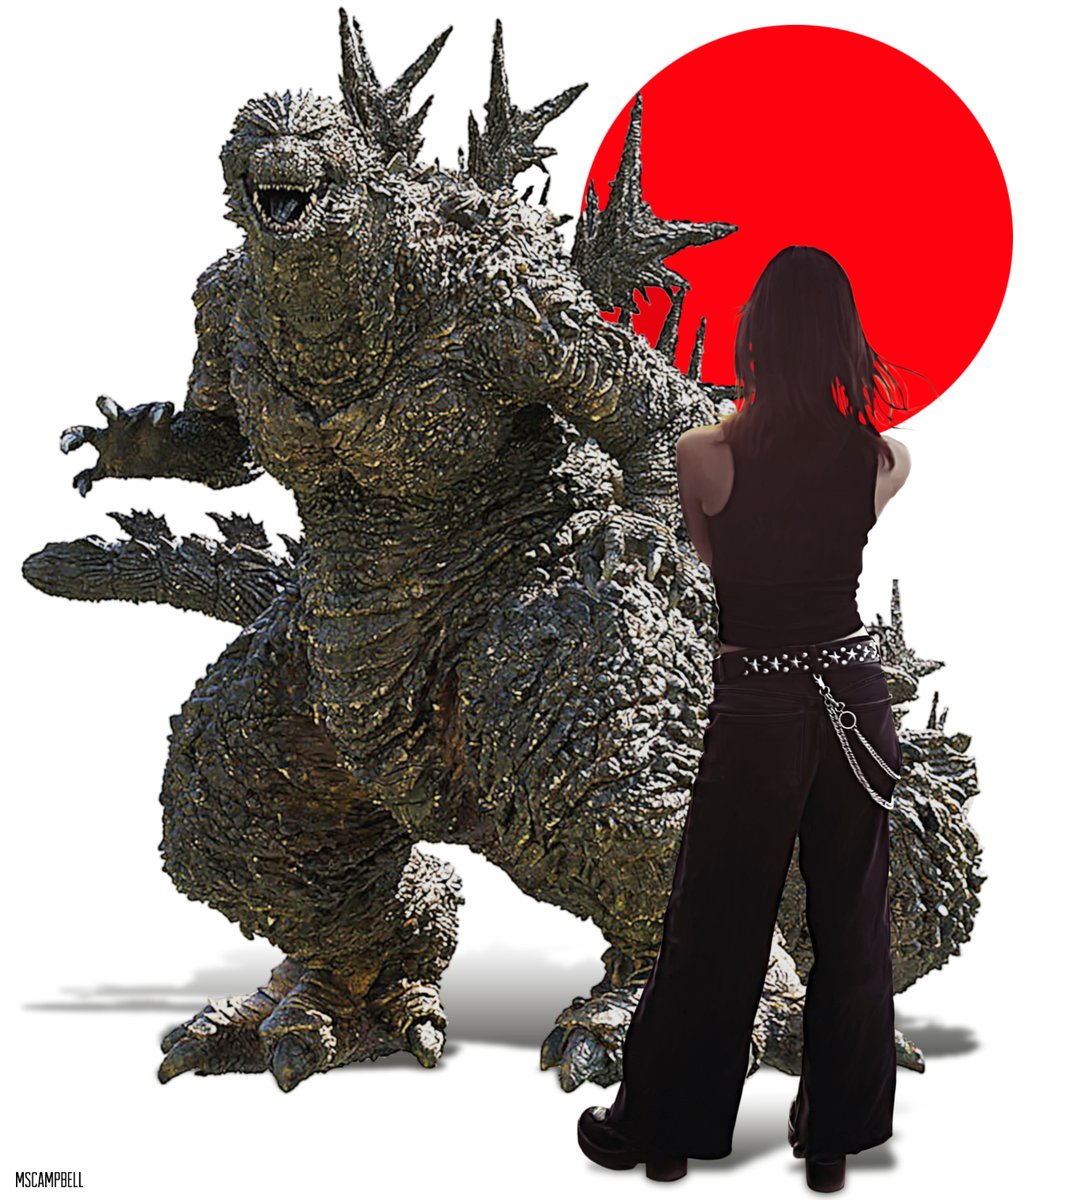 Pau v Godzilla - The Warning - Japan @TheWarningBand2 deviantart.com/mscampbell/art… #PaulinaVillarreal #PauVillarreal #TheWarningRockBand #TheWarningBand #TheWarning #HardRock #RockMusic #AlternativeRock #ModernRock #Drums #FemaleDrumPlayer #México #Drummer #Godzilla